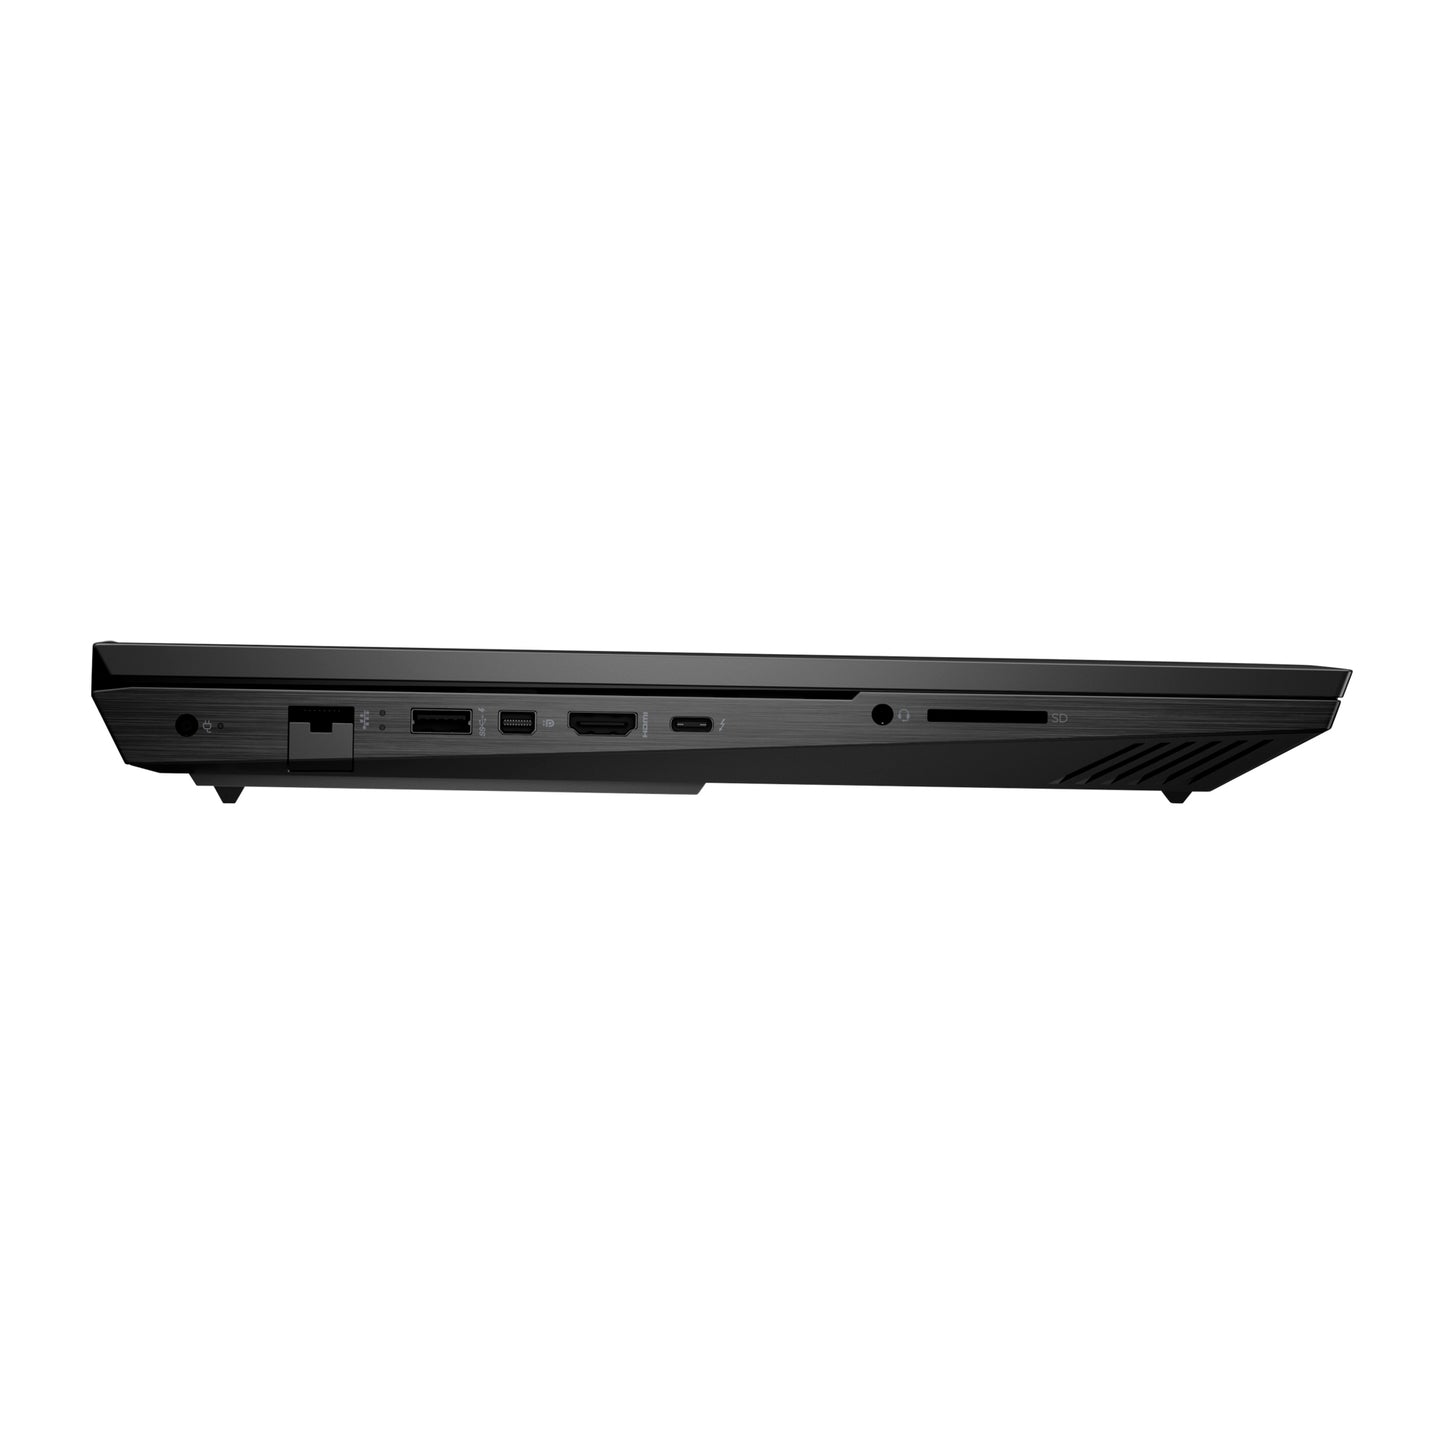 HP Omen 17-CK1010NR Core i7-12700h Rtx 3060 144hz 17.3" Gaming Laptops (New OB)